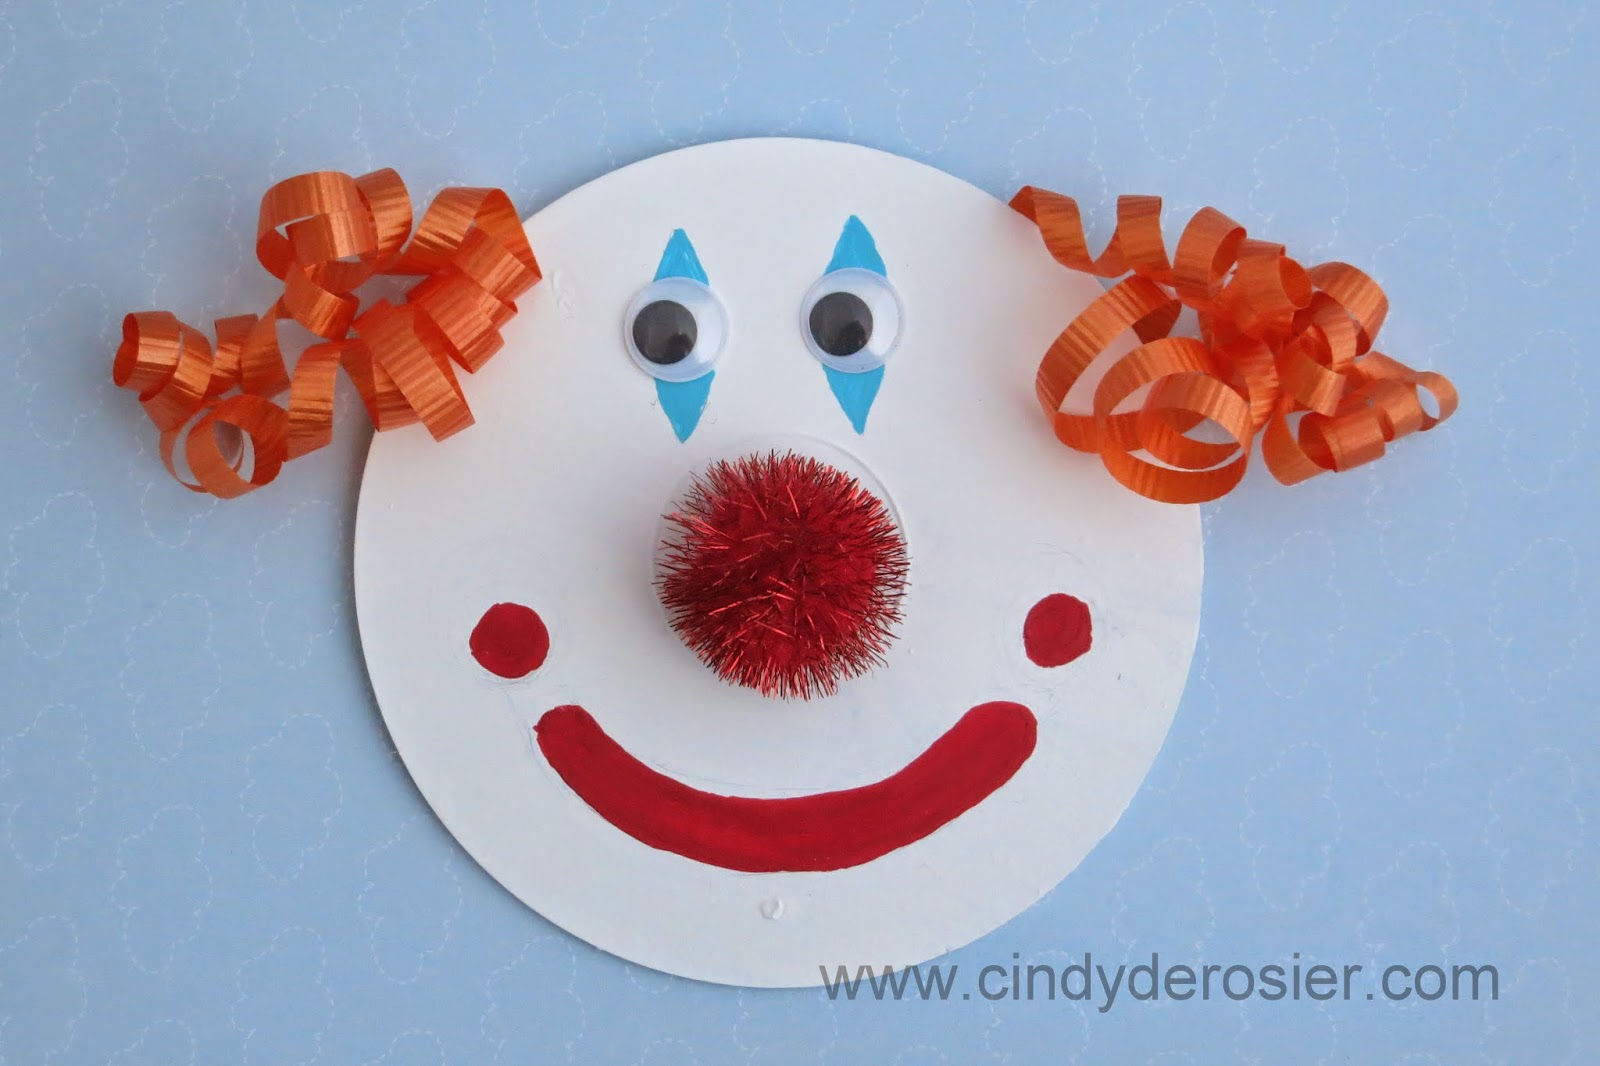 Cindy deRosier: My Creative Life: CD Clowns1600 x 1066